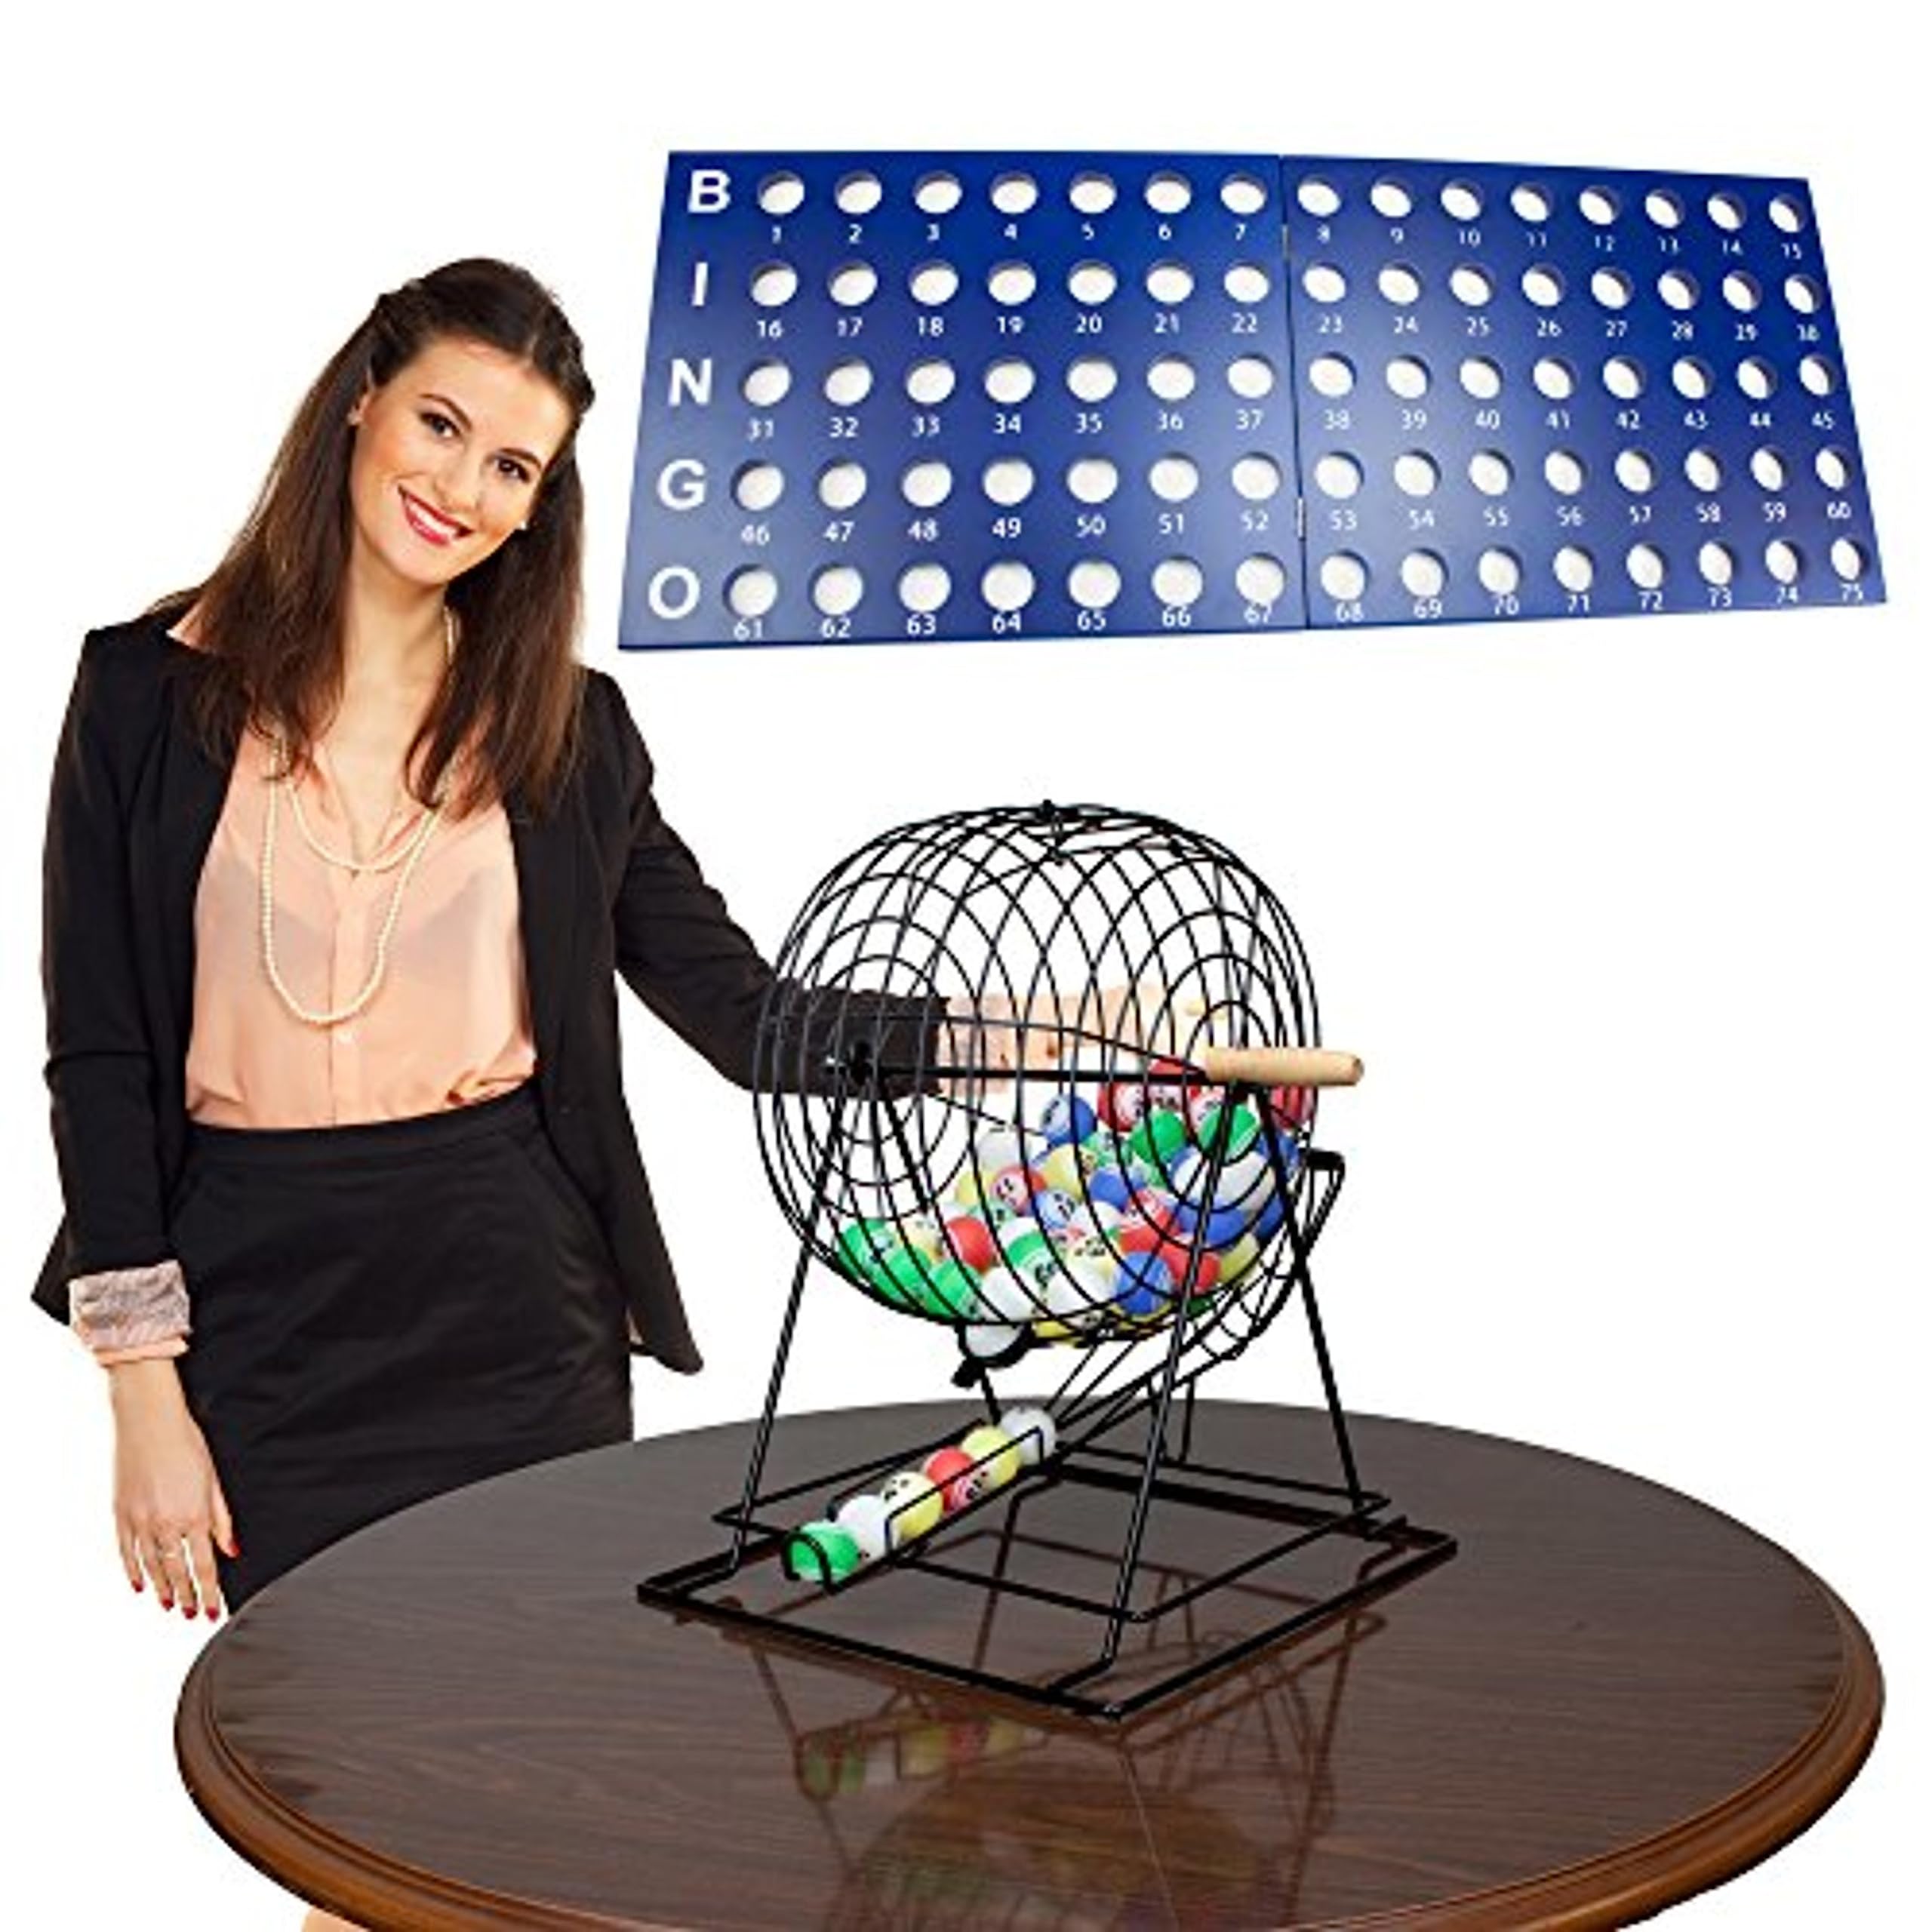 Royal Bingo Supplies Professional Bingo Set with 19